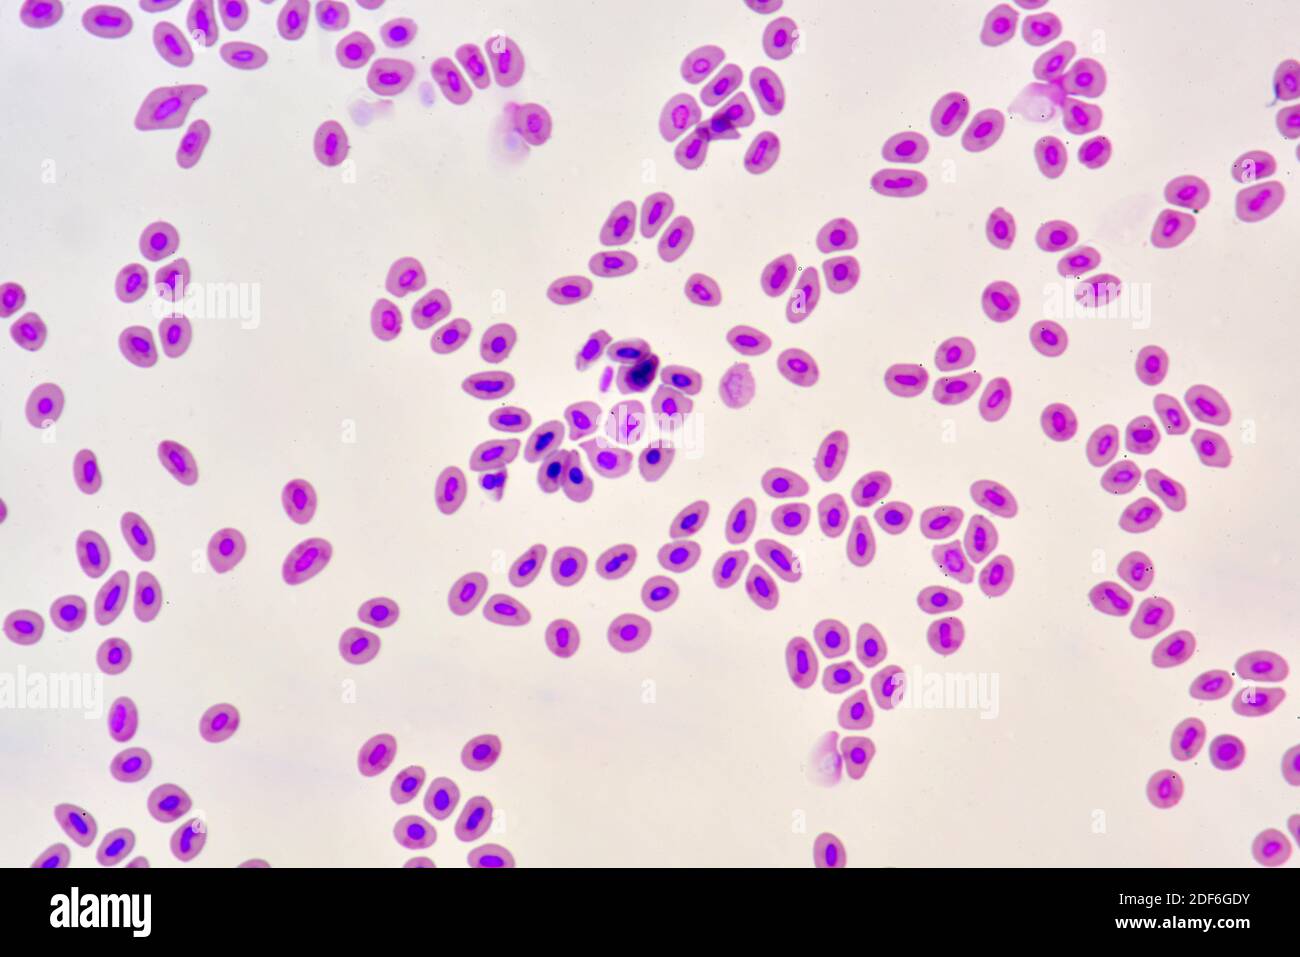 Sangre de peces con eritrocitos nucleados. óptico X400 Fotografía stock - Alamy